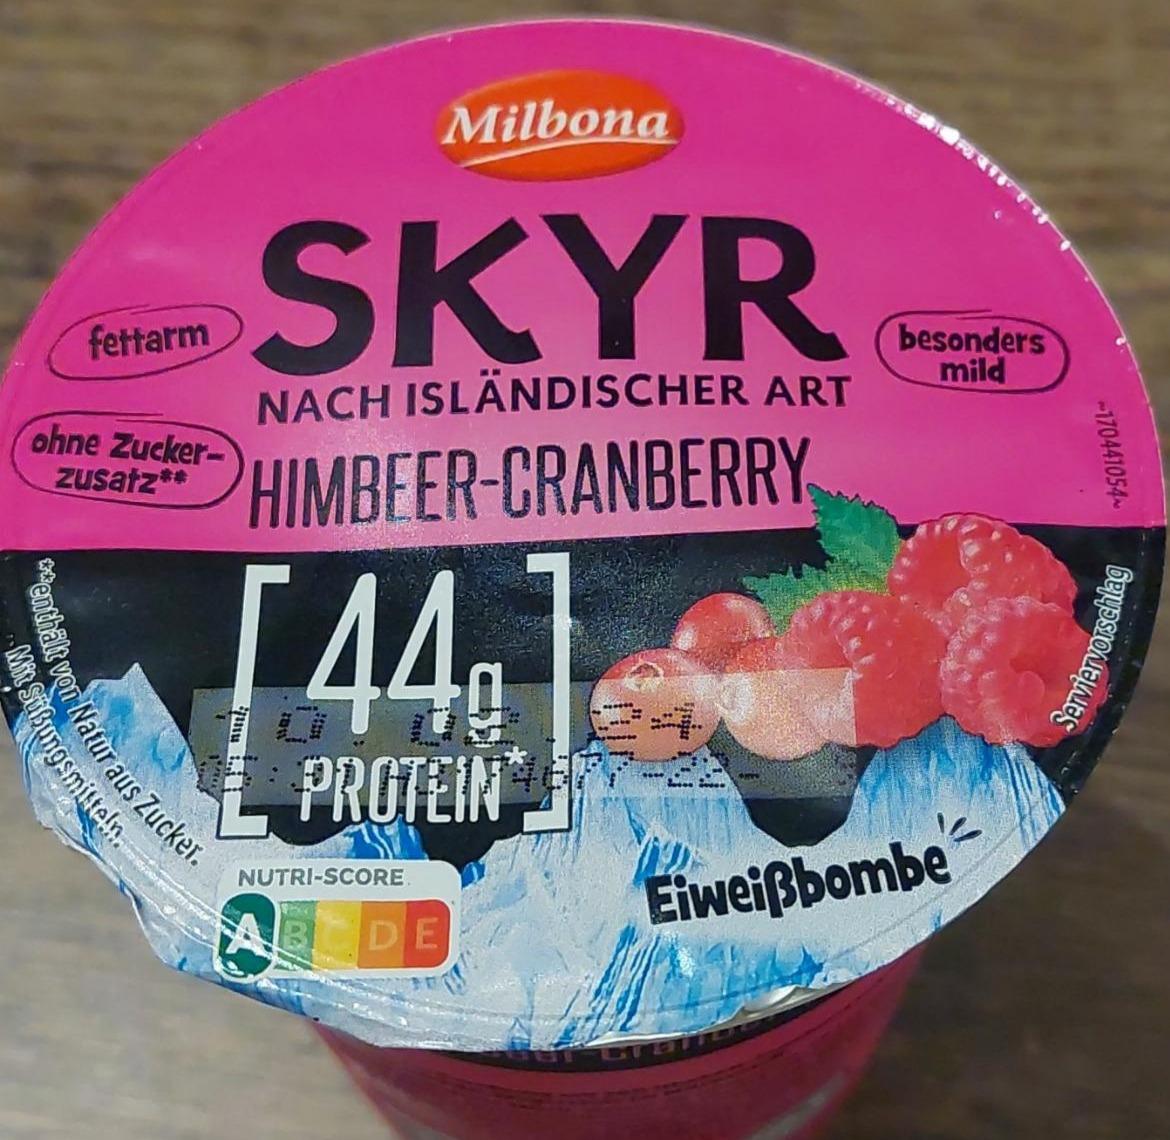 Zdjęcia - Skyr nach islandischer Art Himbeer cranberry Milbona